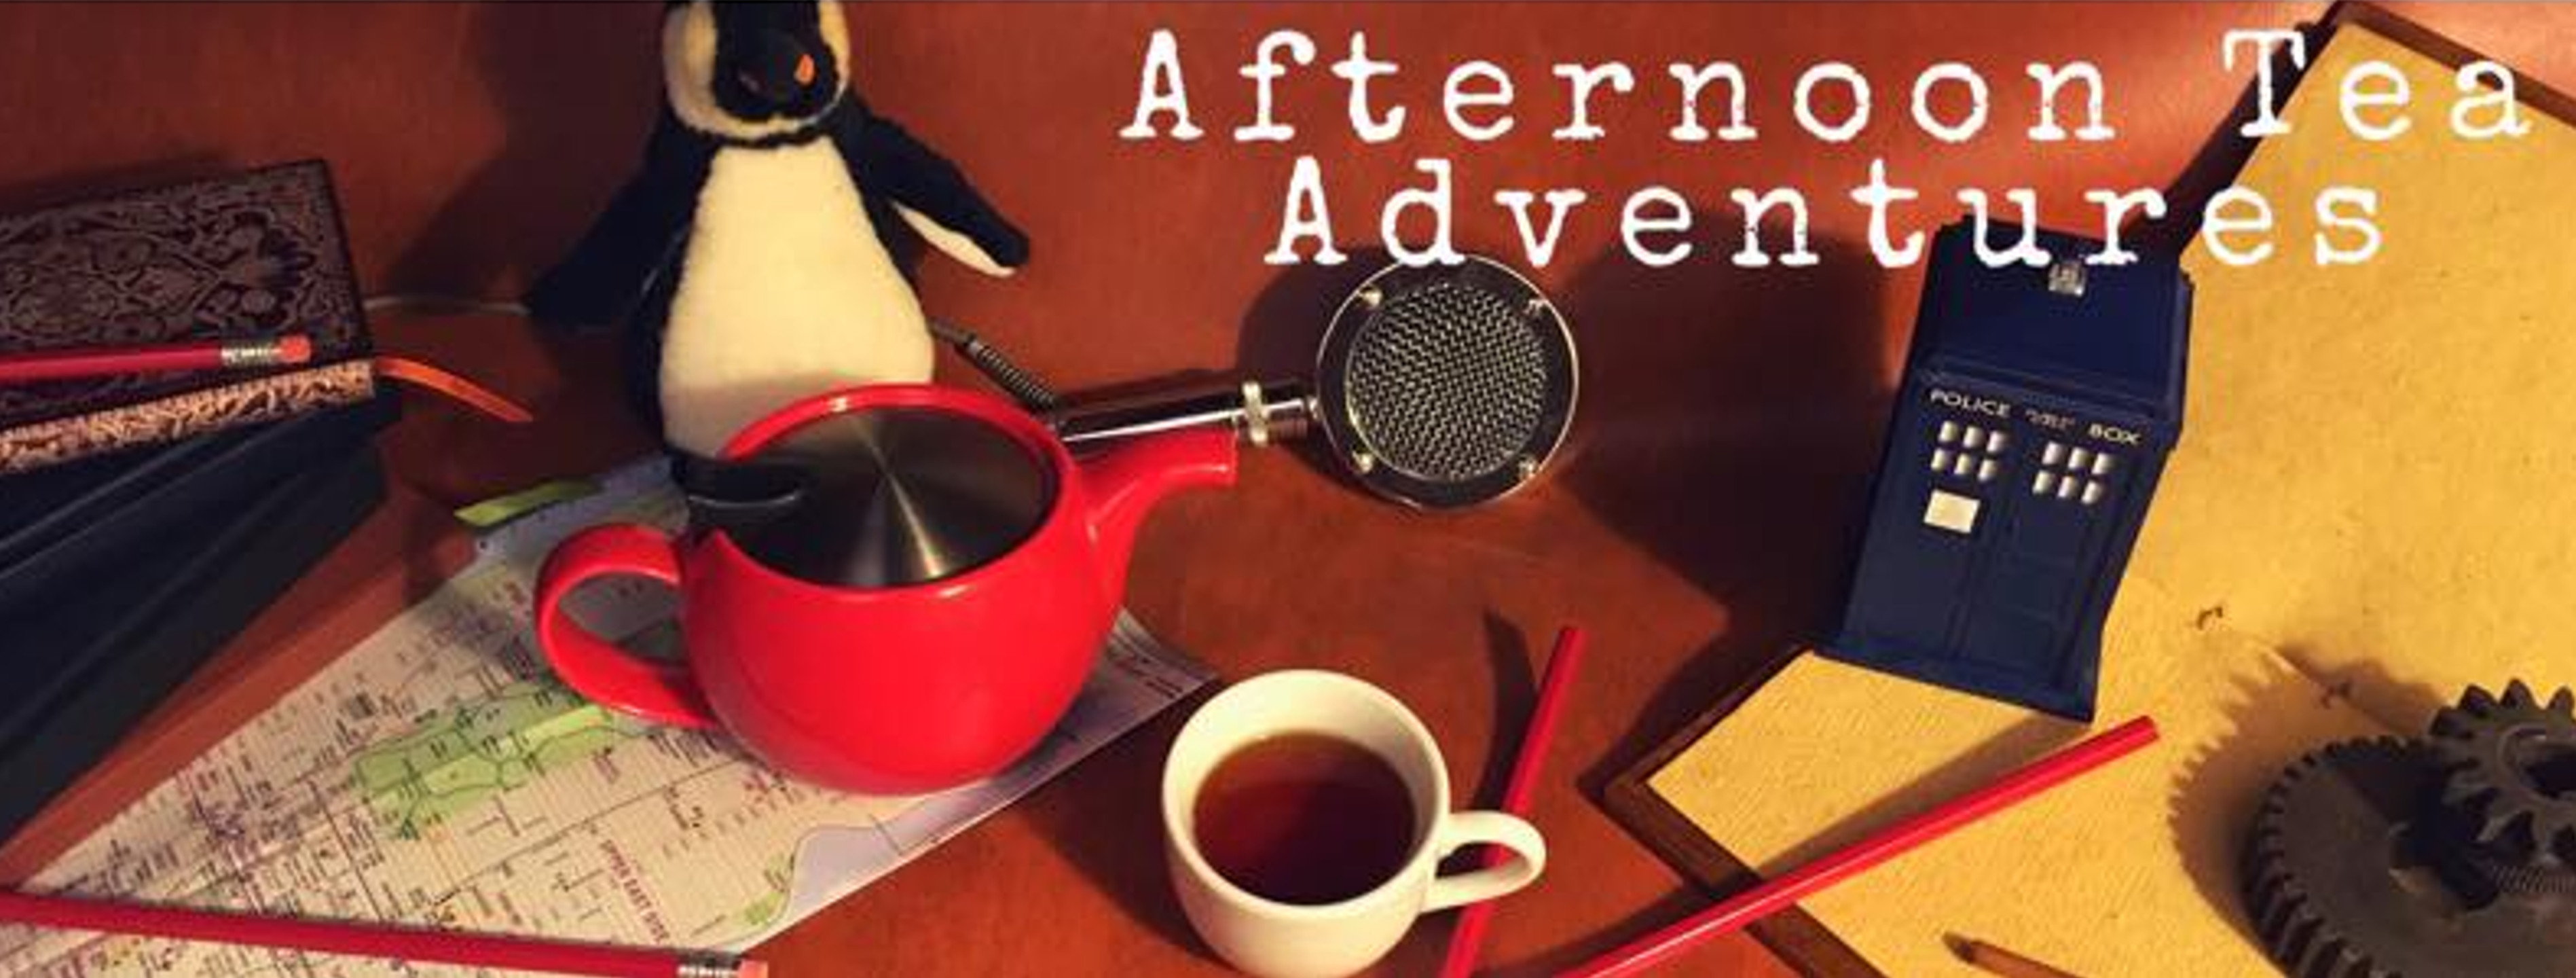 Afternoon Tea Adventures - banner